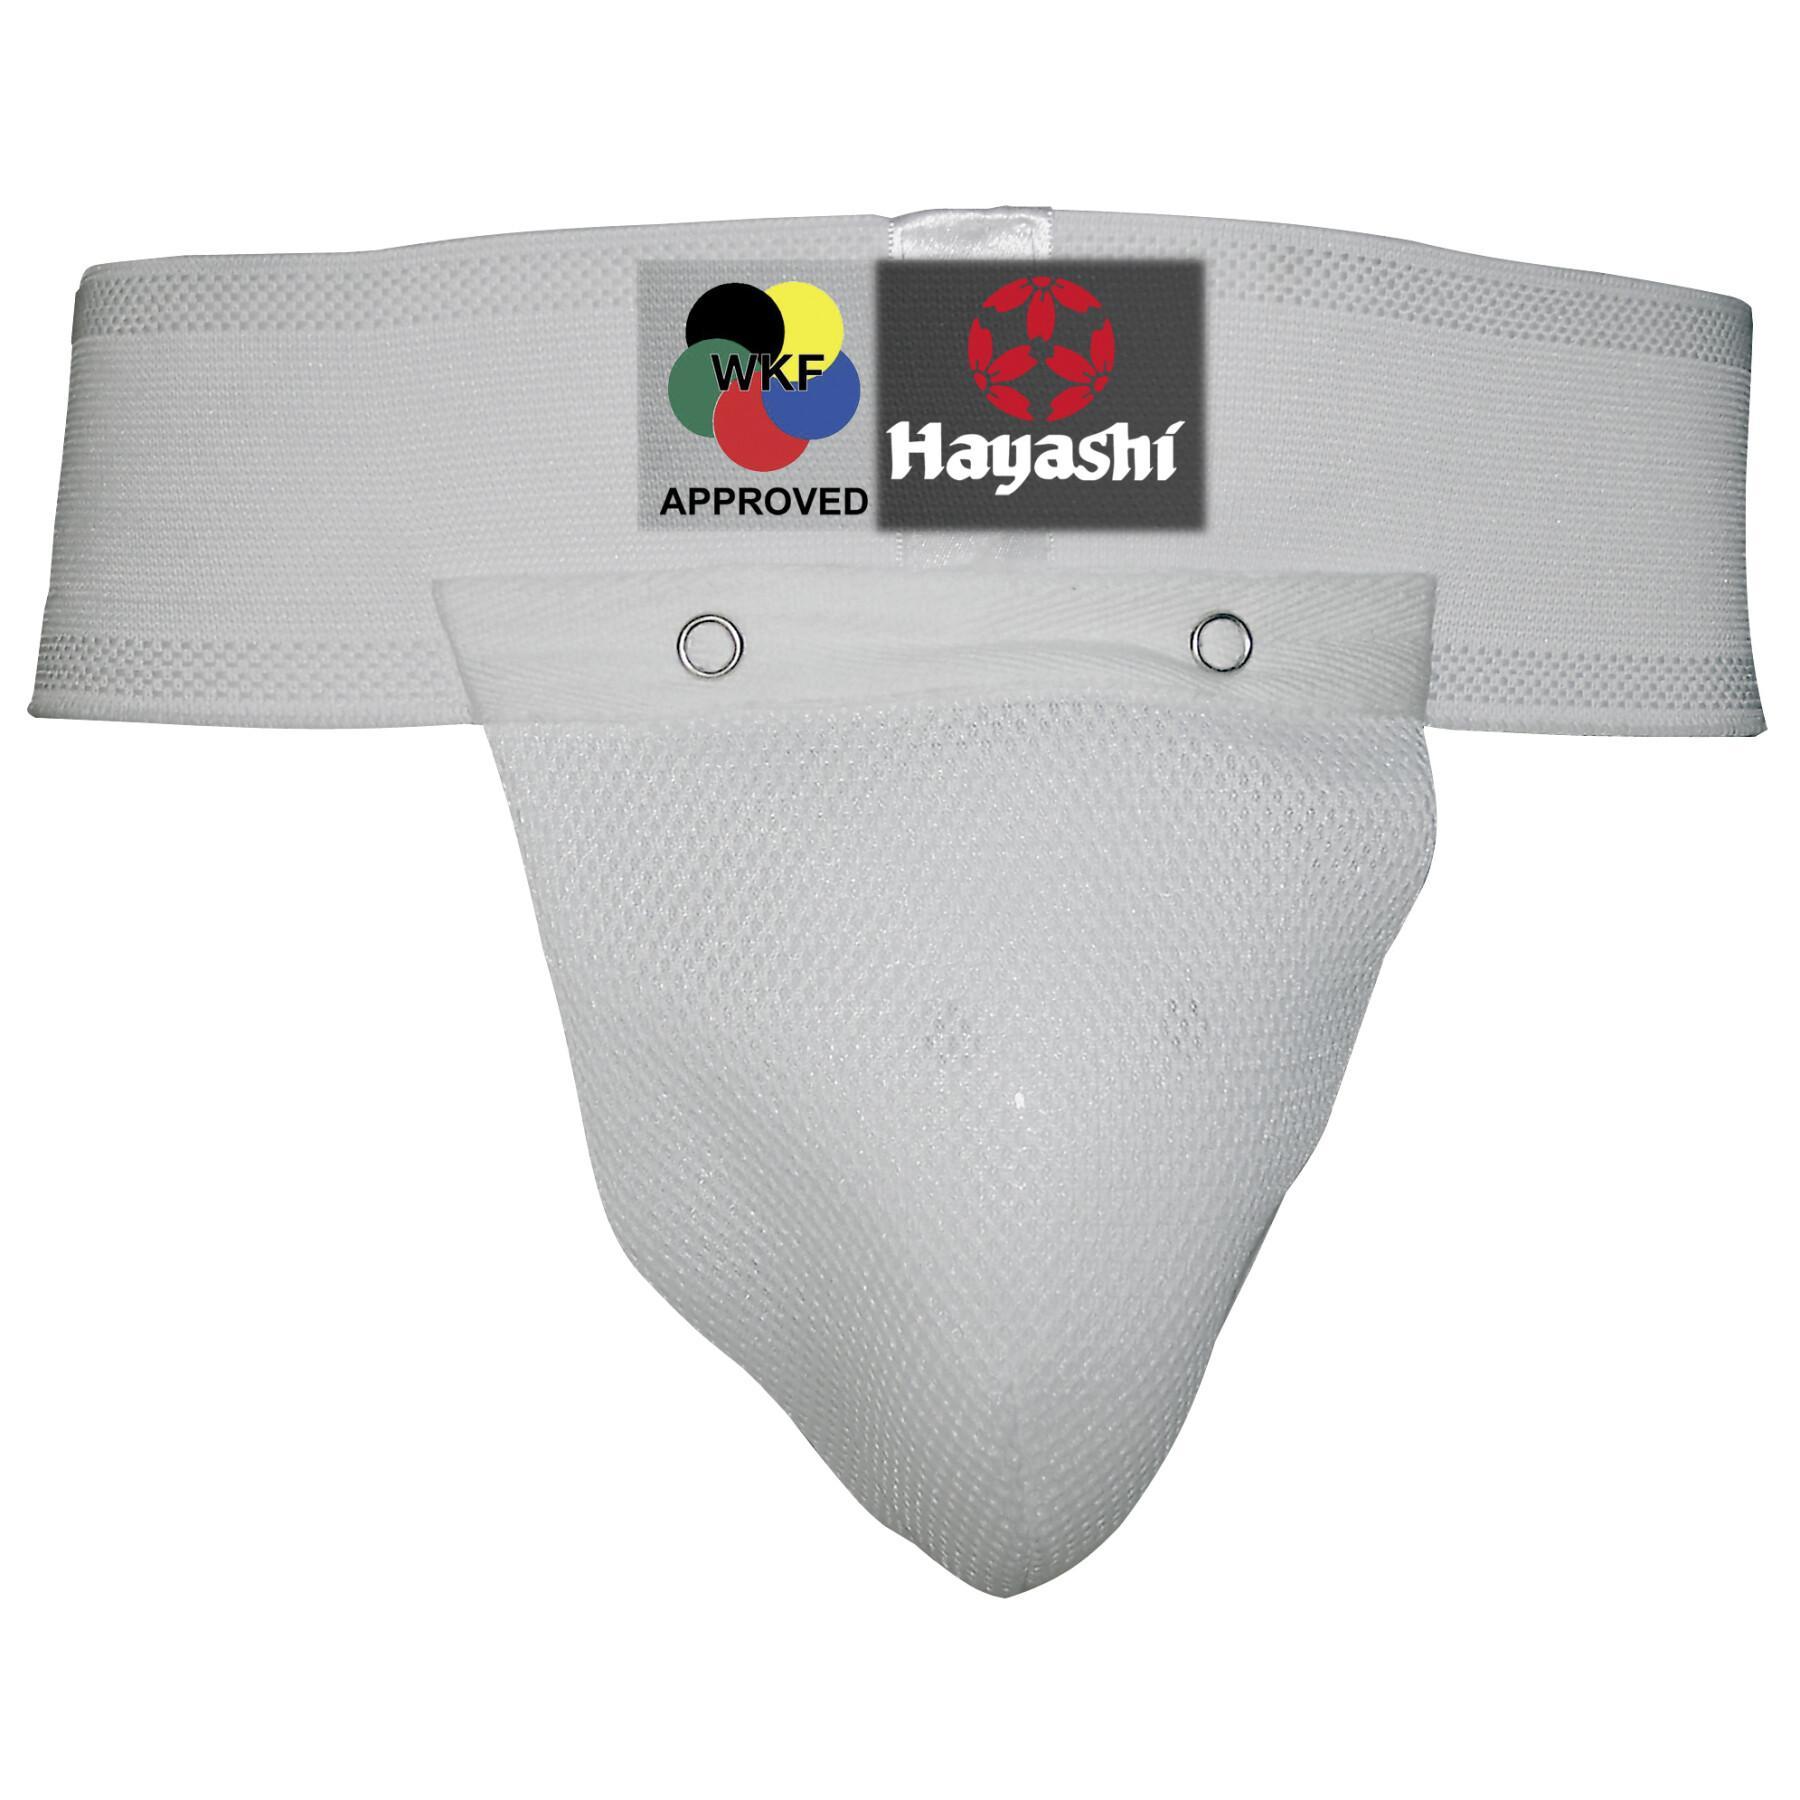 Protective shell Hayashi WKF approved